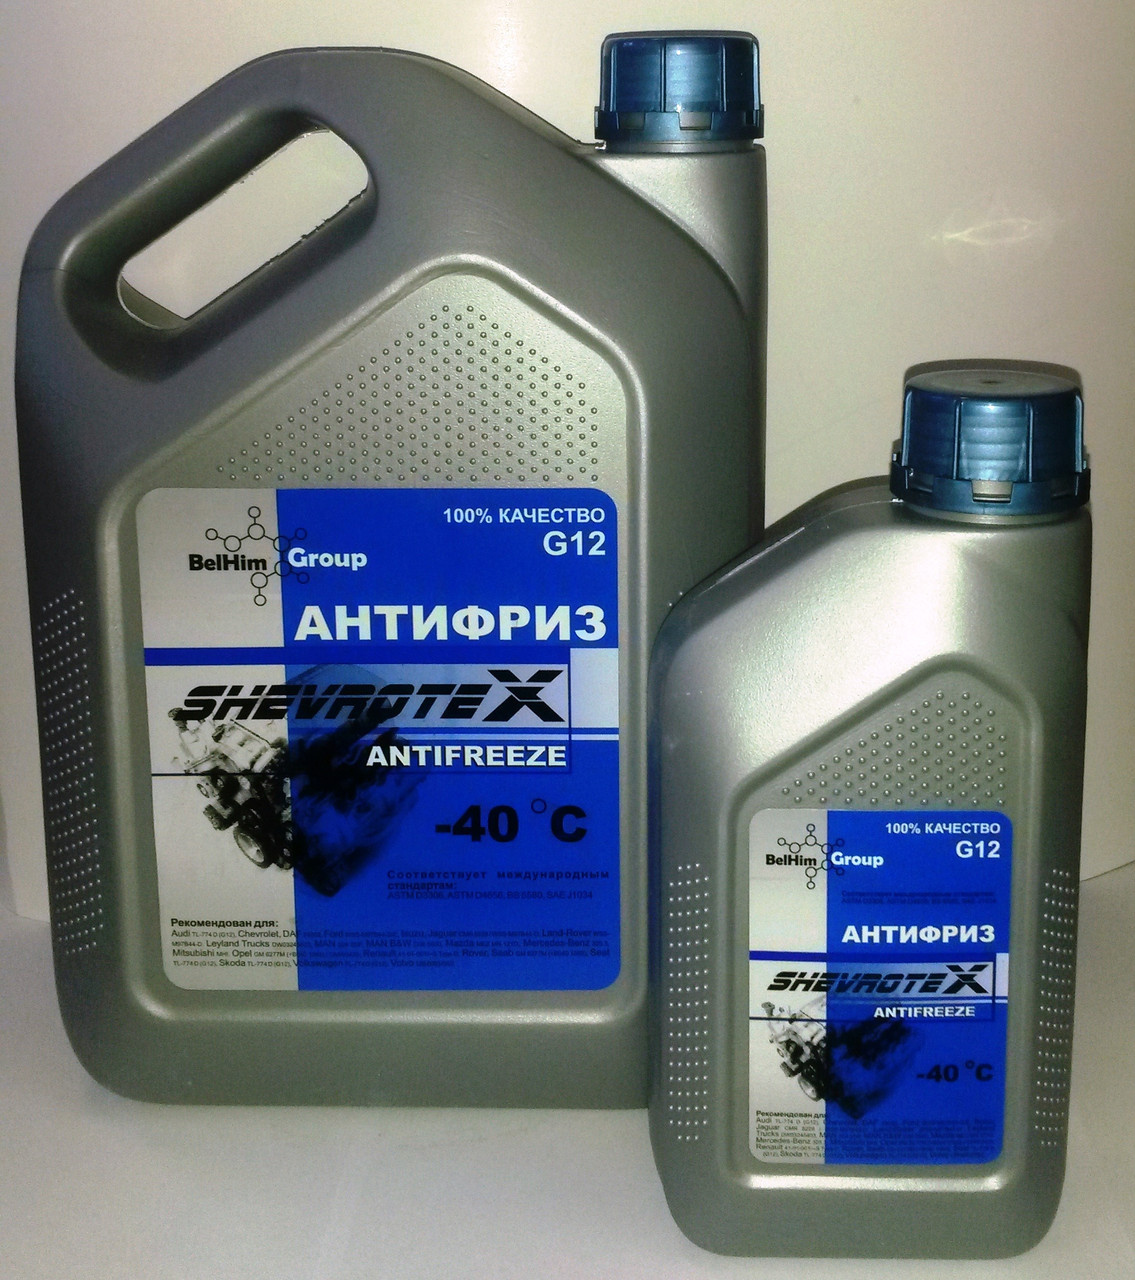 Антифриз Shevrotex G12 карбоксилатный (синий) 1 кг,5 кг, 10 кг, 20 кг, 30 кг, 230 кг